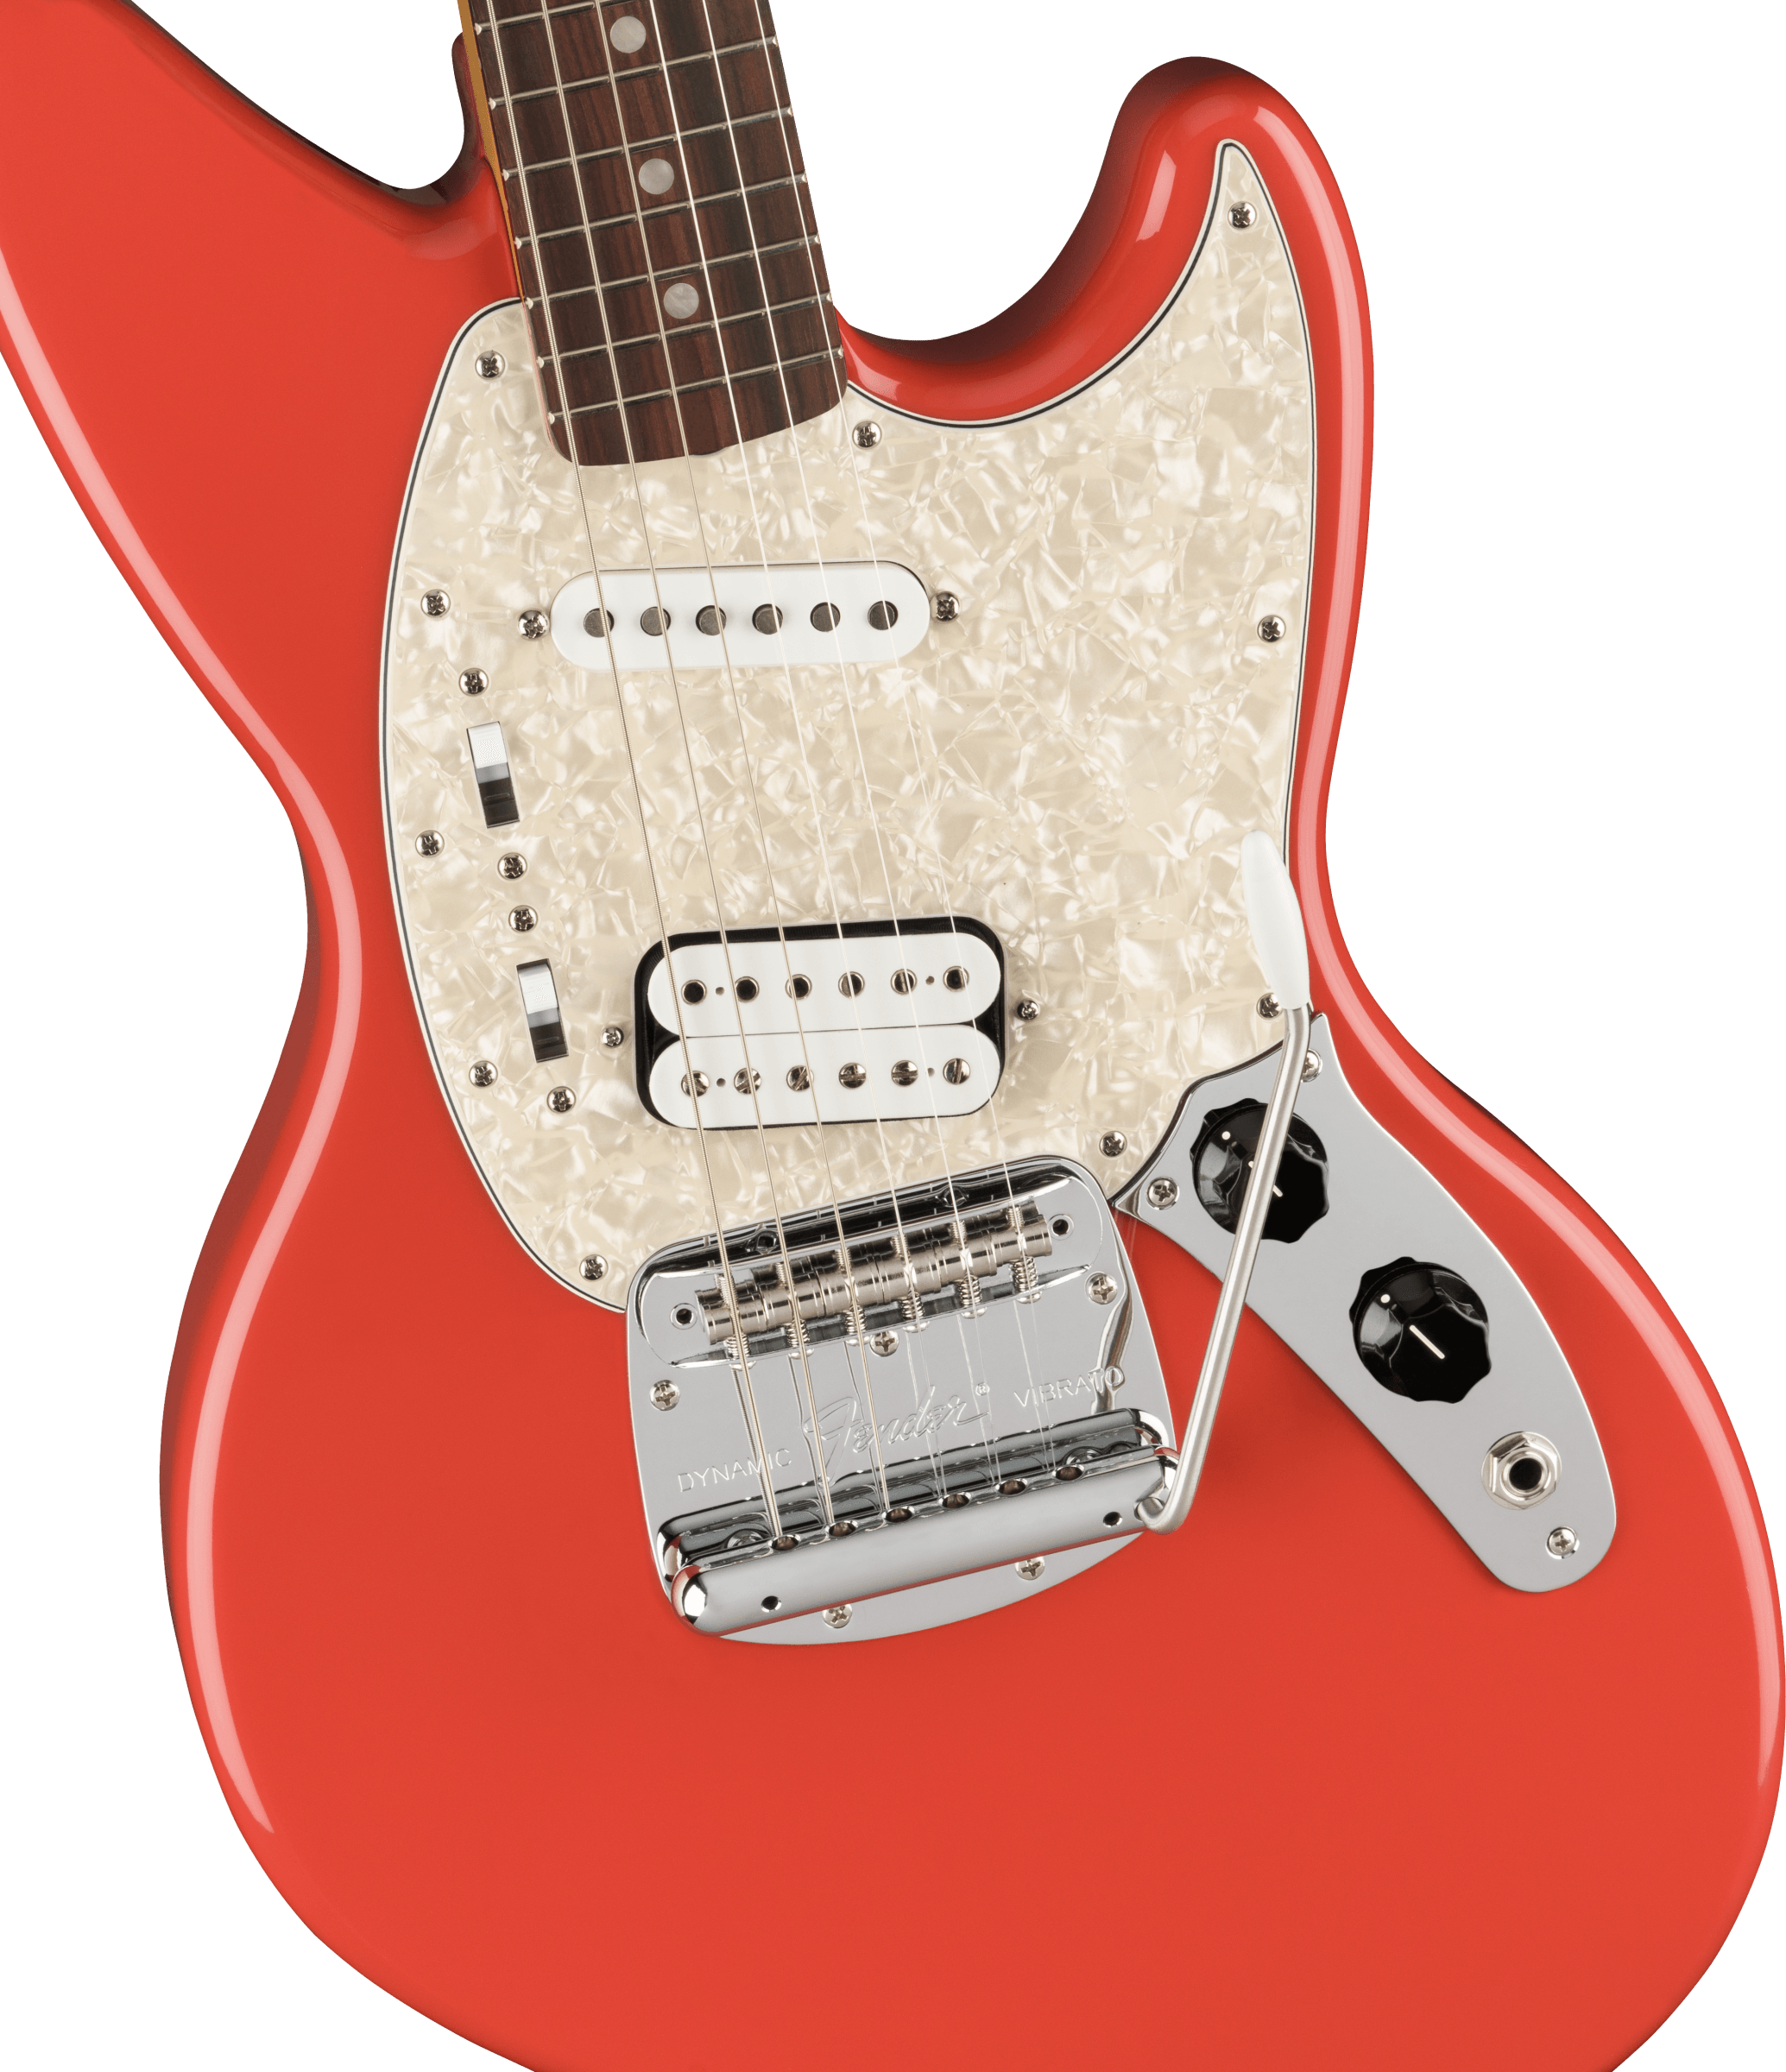 Fender Jag-stang Kurt Cobain Artist Hs Trem Rw - Fiesta Red - Retro rock electric guitar - Variation 2